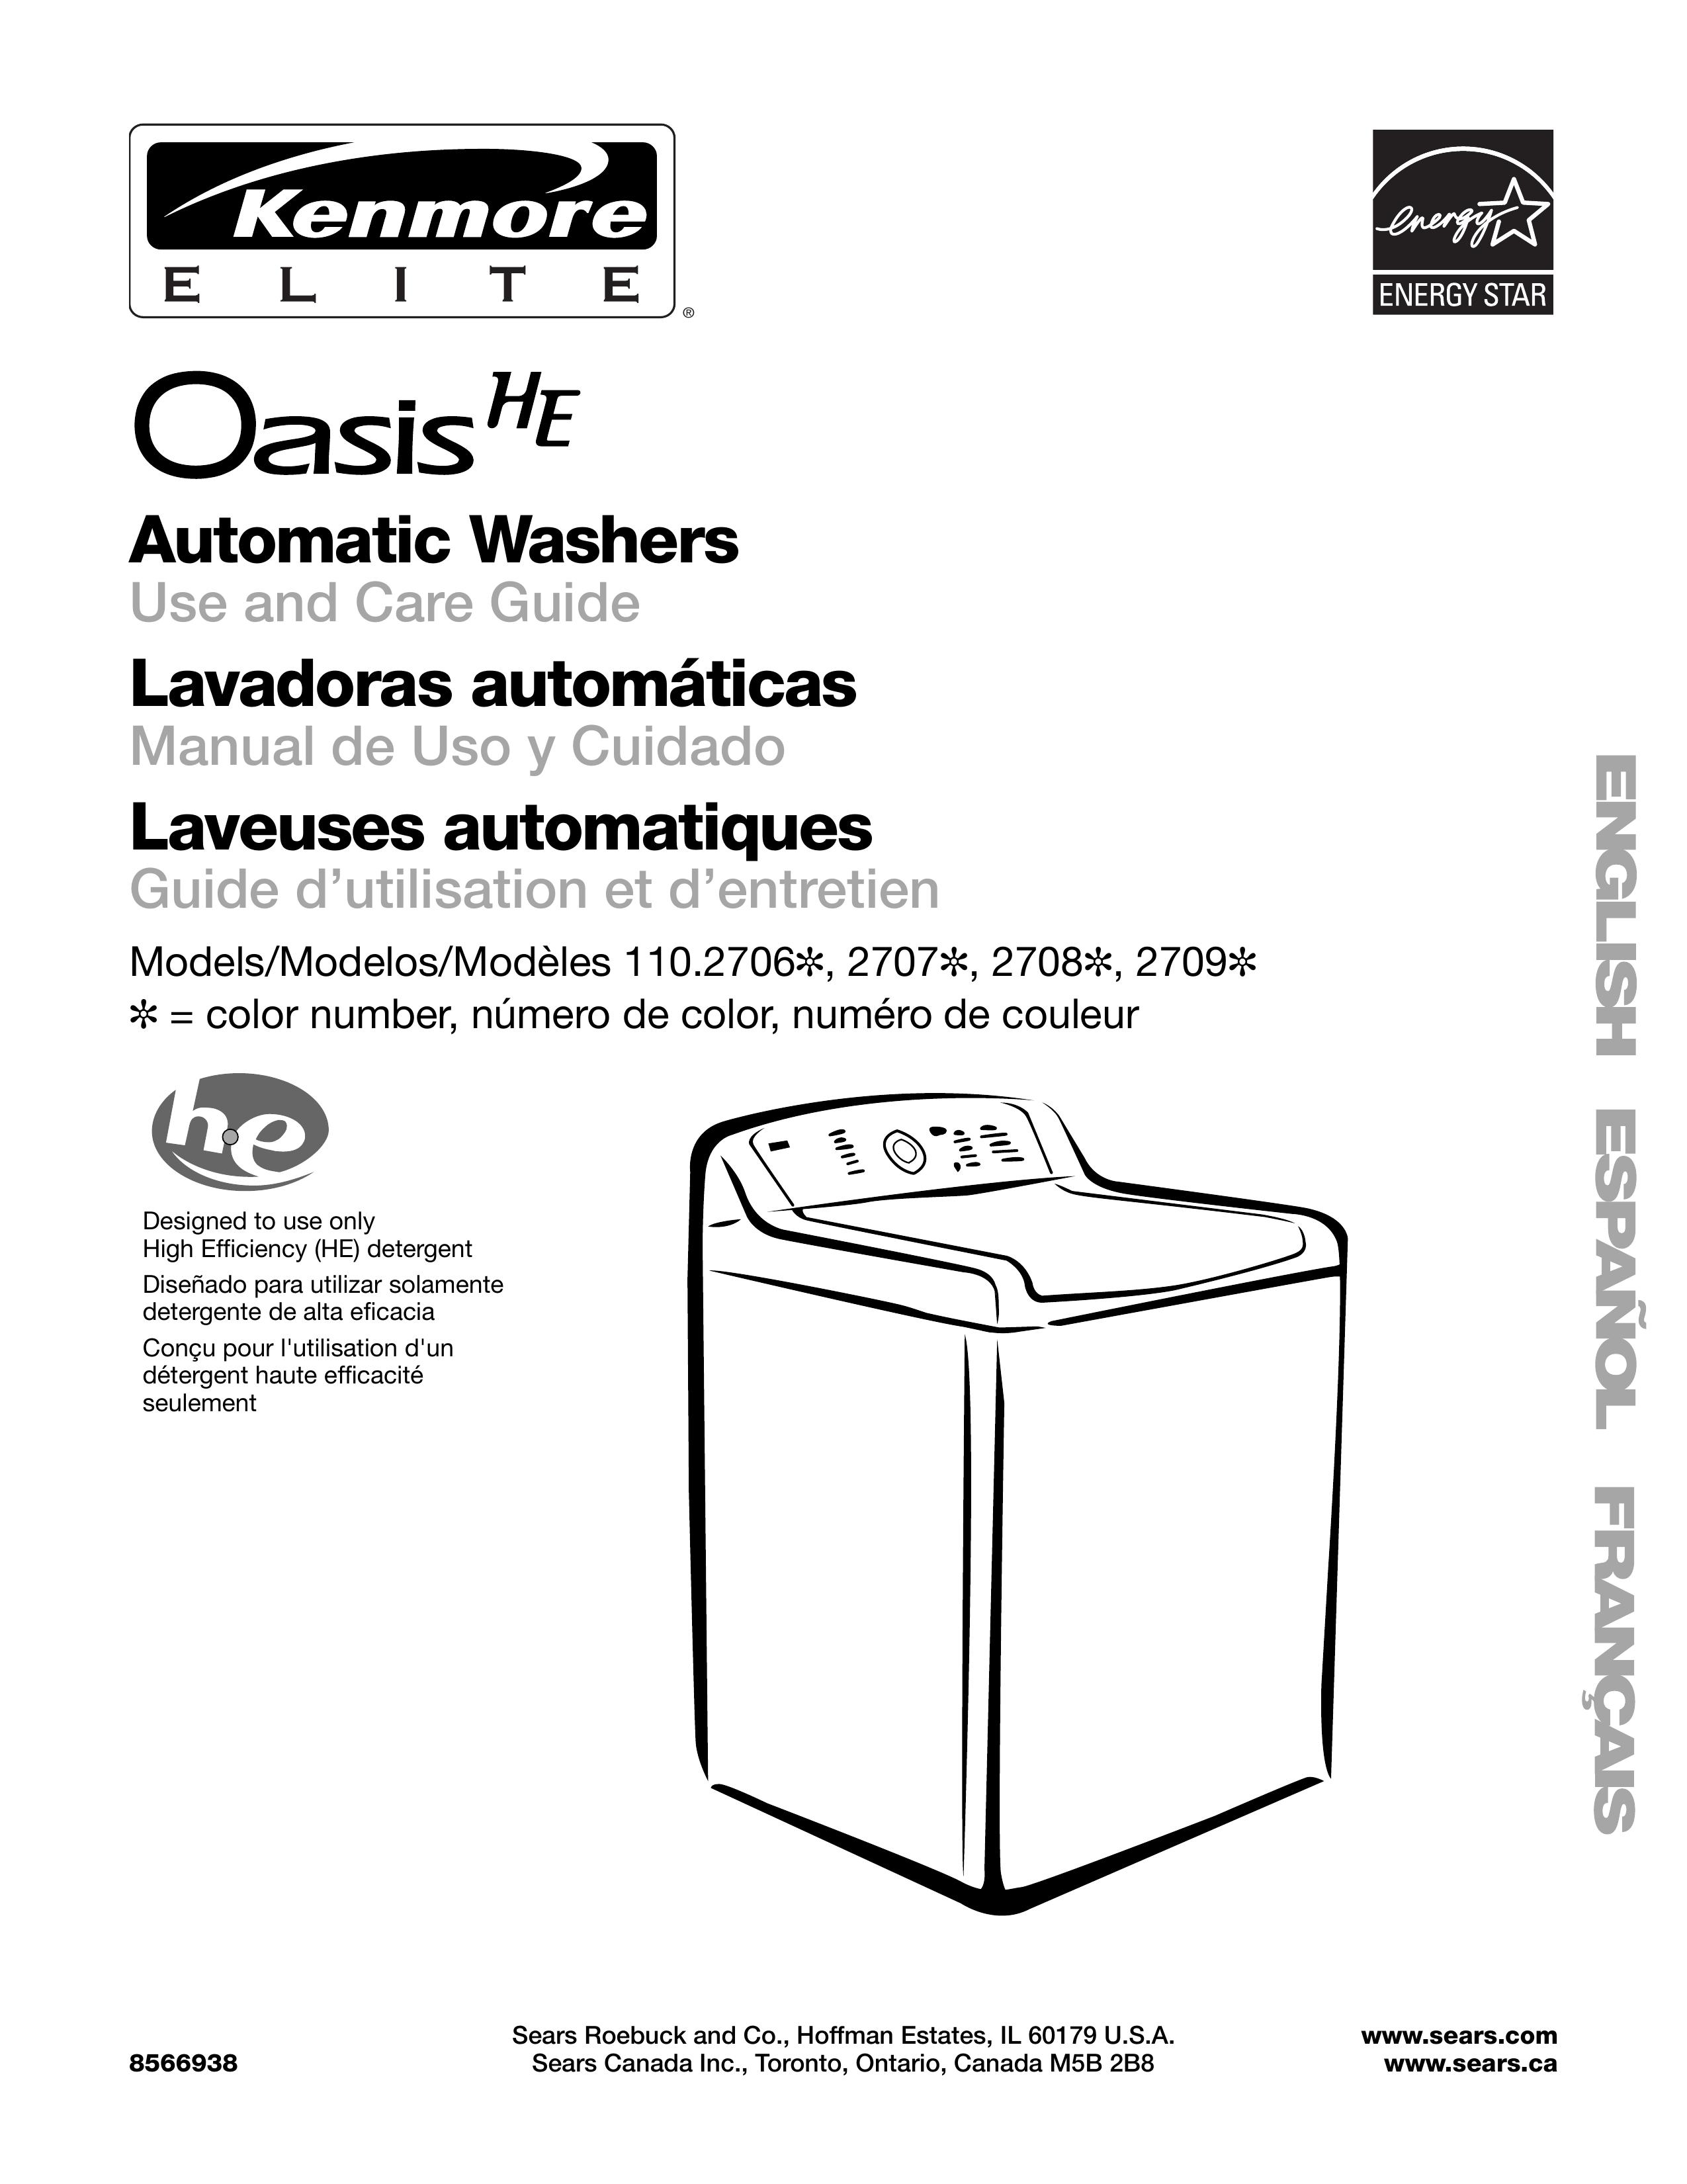 Kenmore 110.2706 Washer/Dryer User Manual